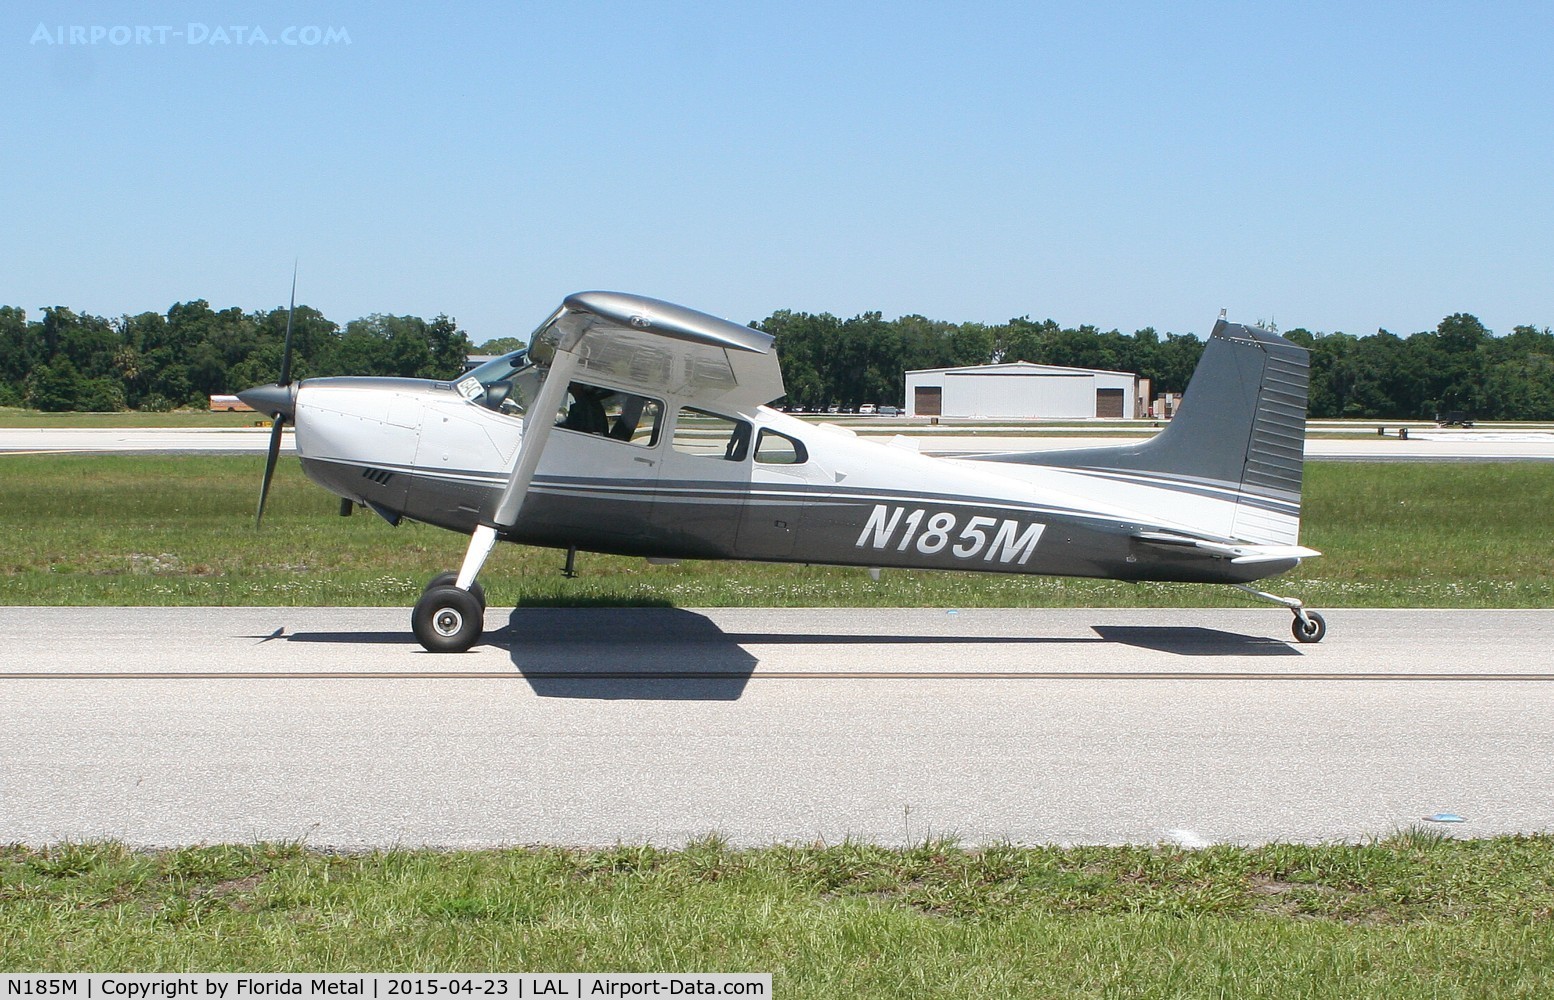 N185M, 1981 Cessna A185F Skywagon 185 C/N 18504264, Cessna 185